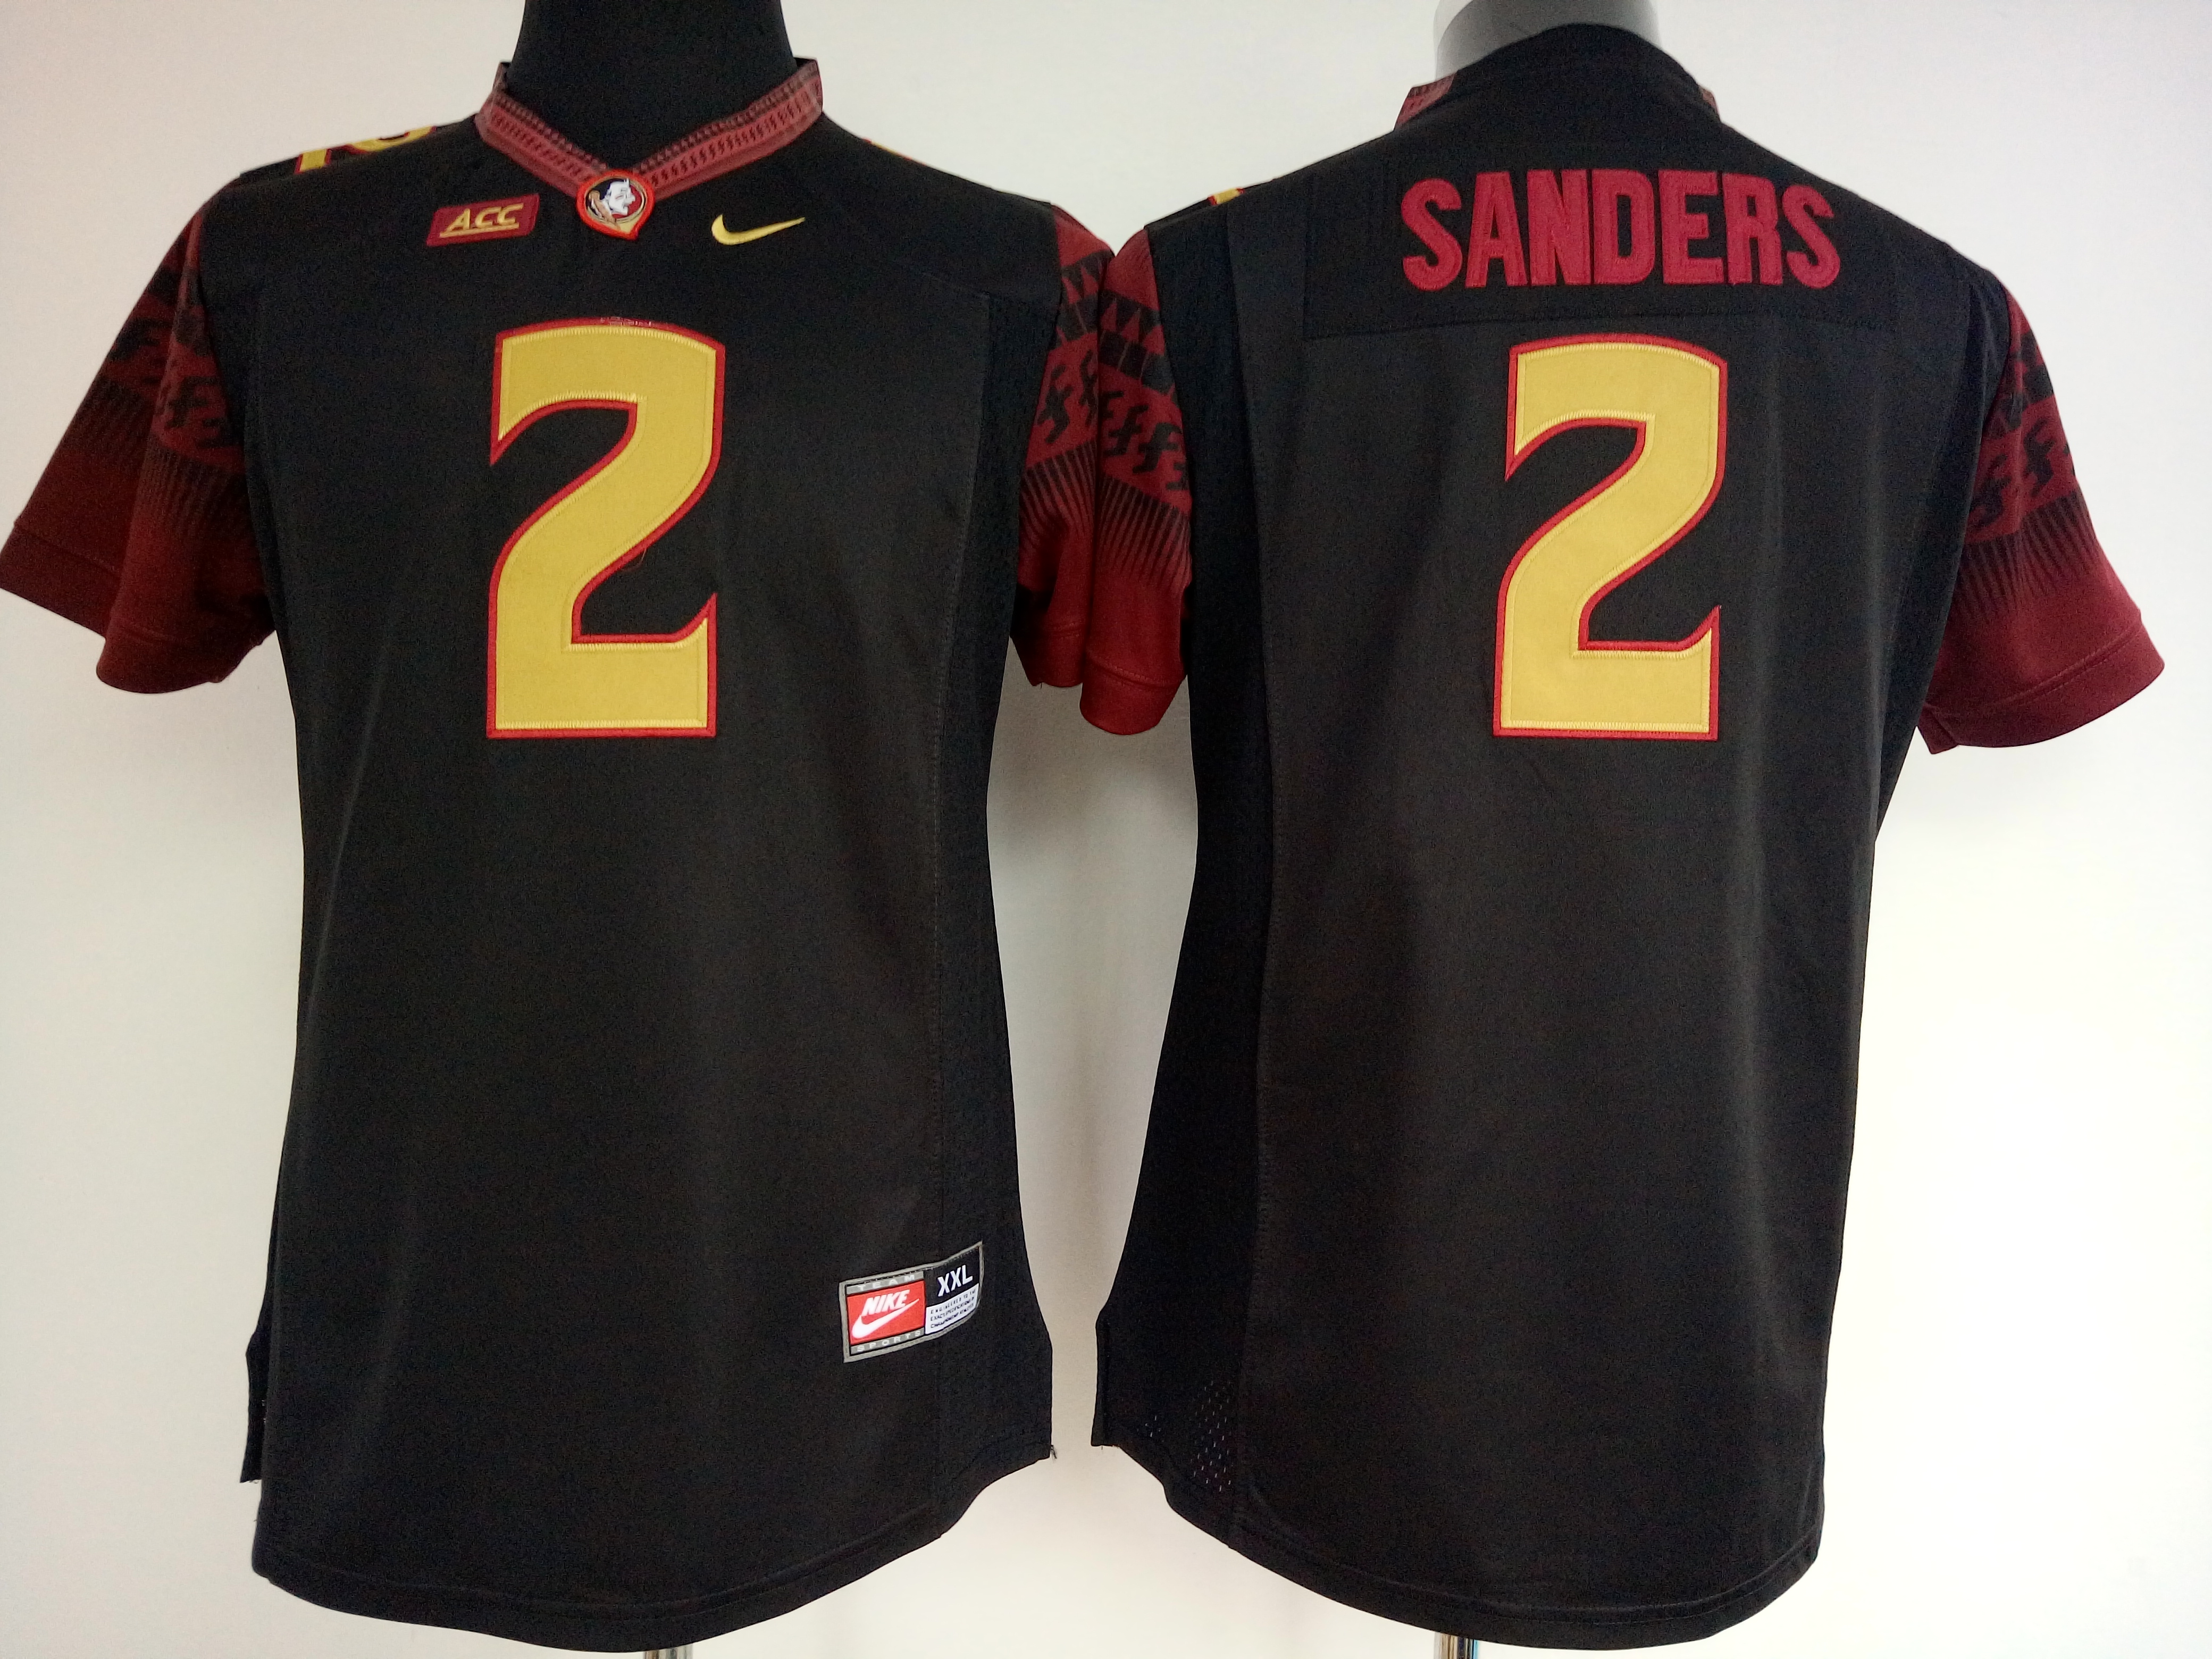 NCAA Womens Florida State Seminoles Black #2 Sanders jerseys